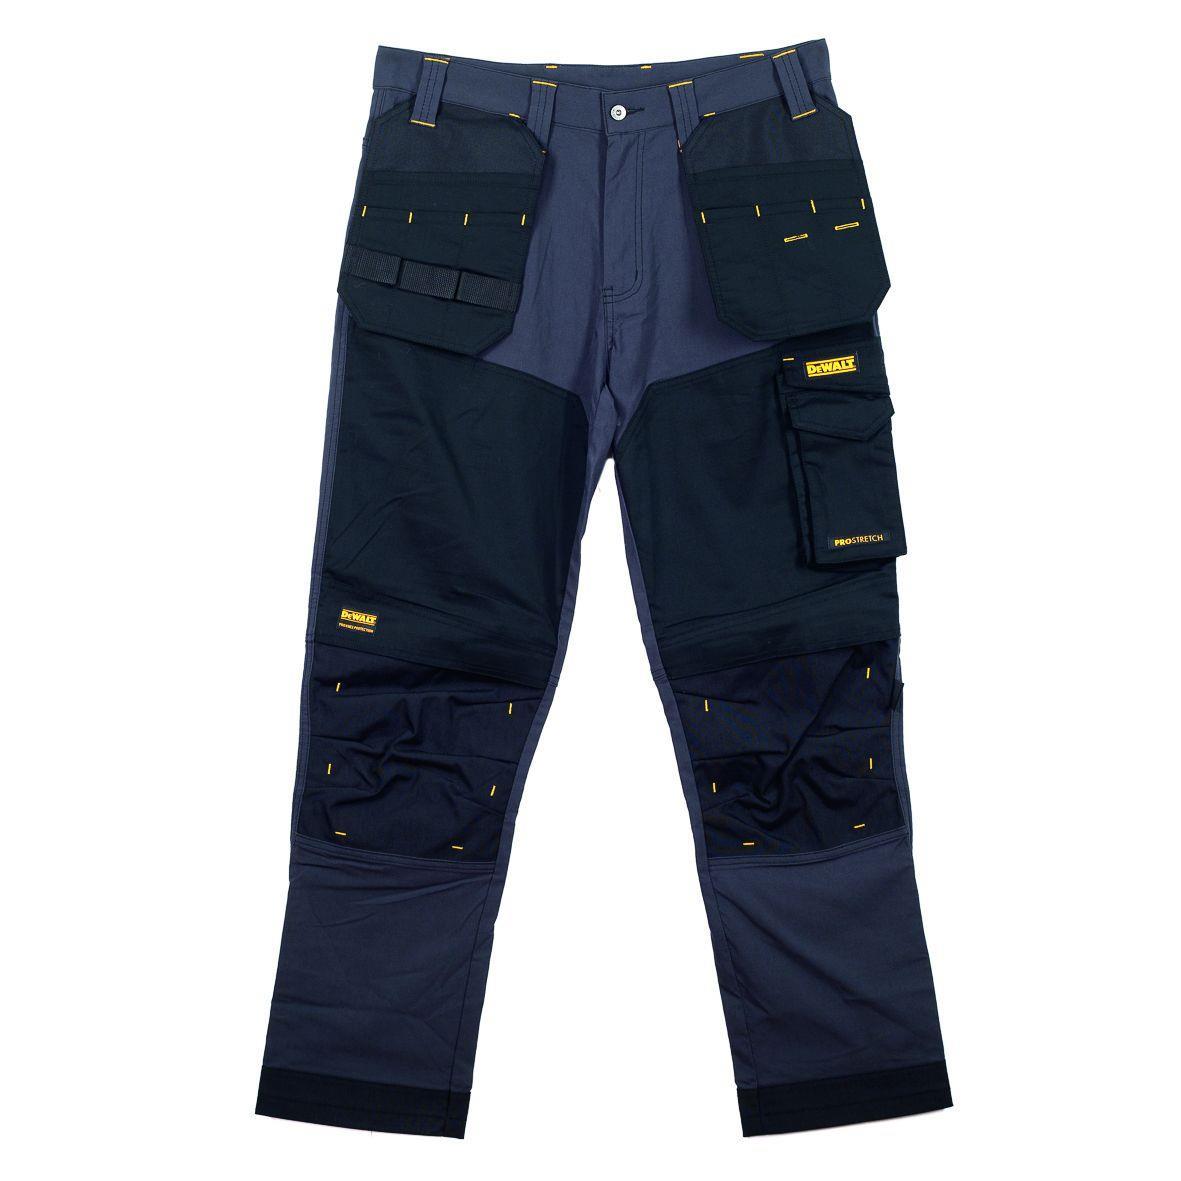 DeWalt Memphis grey/black twin holster knee pad pockets regular fit work trousers